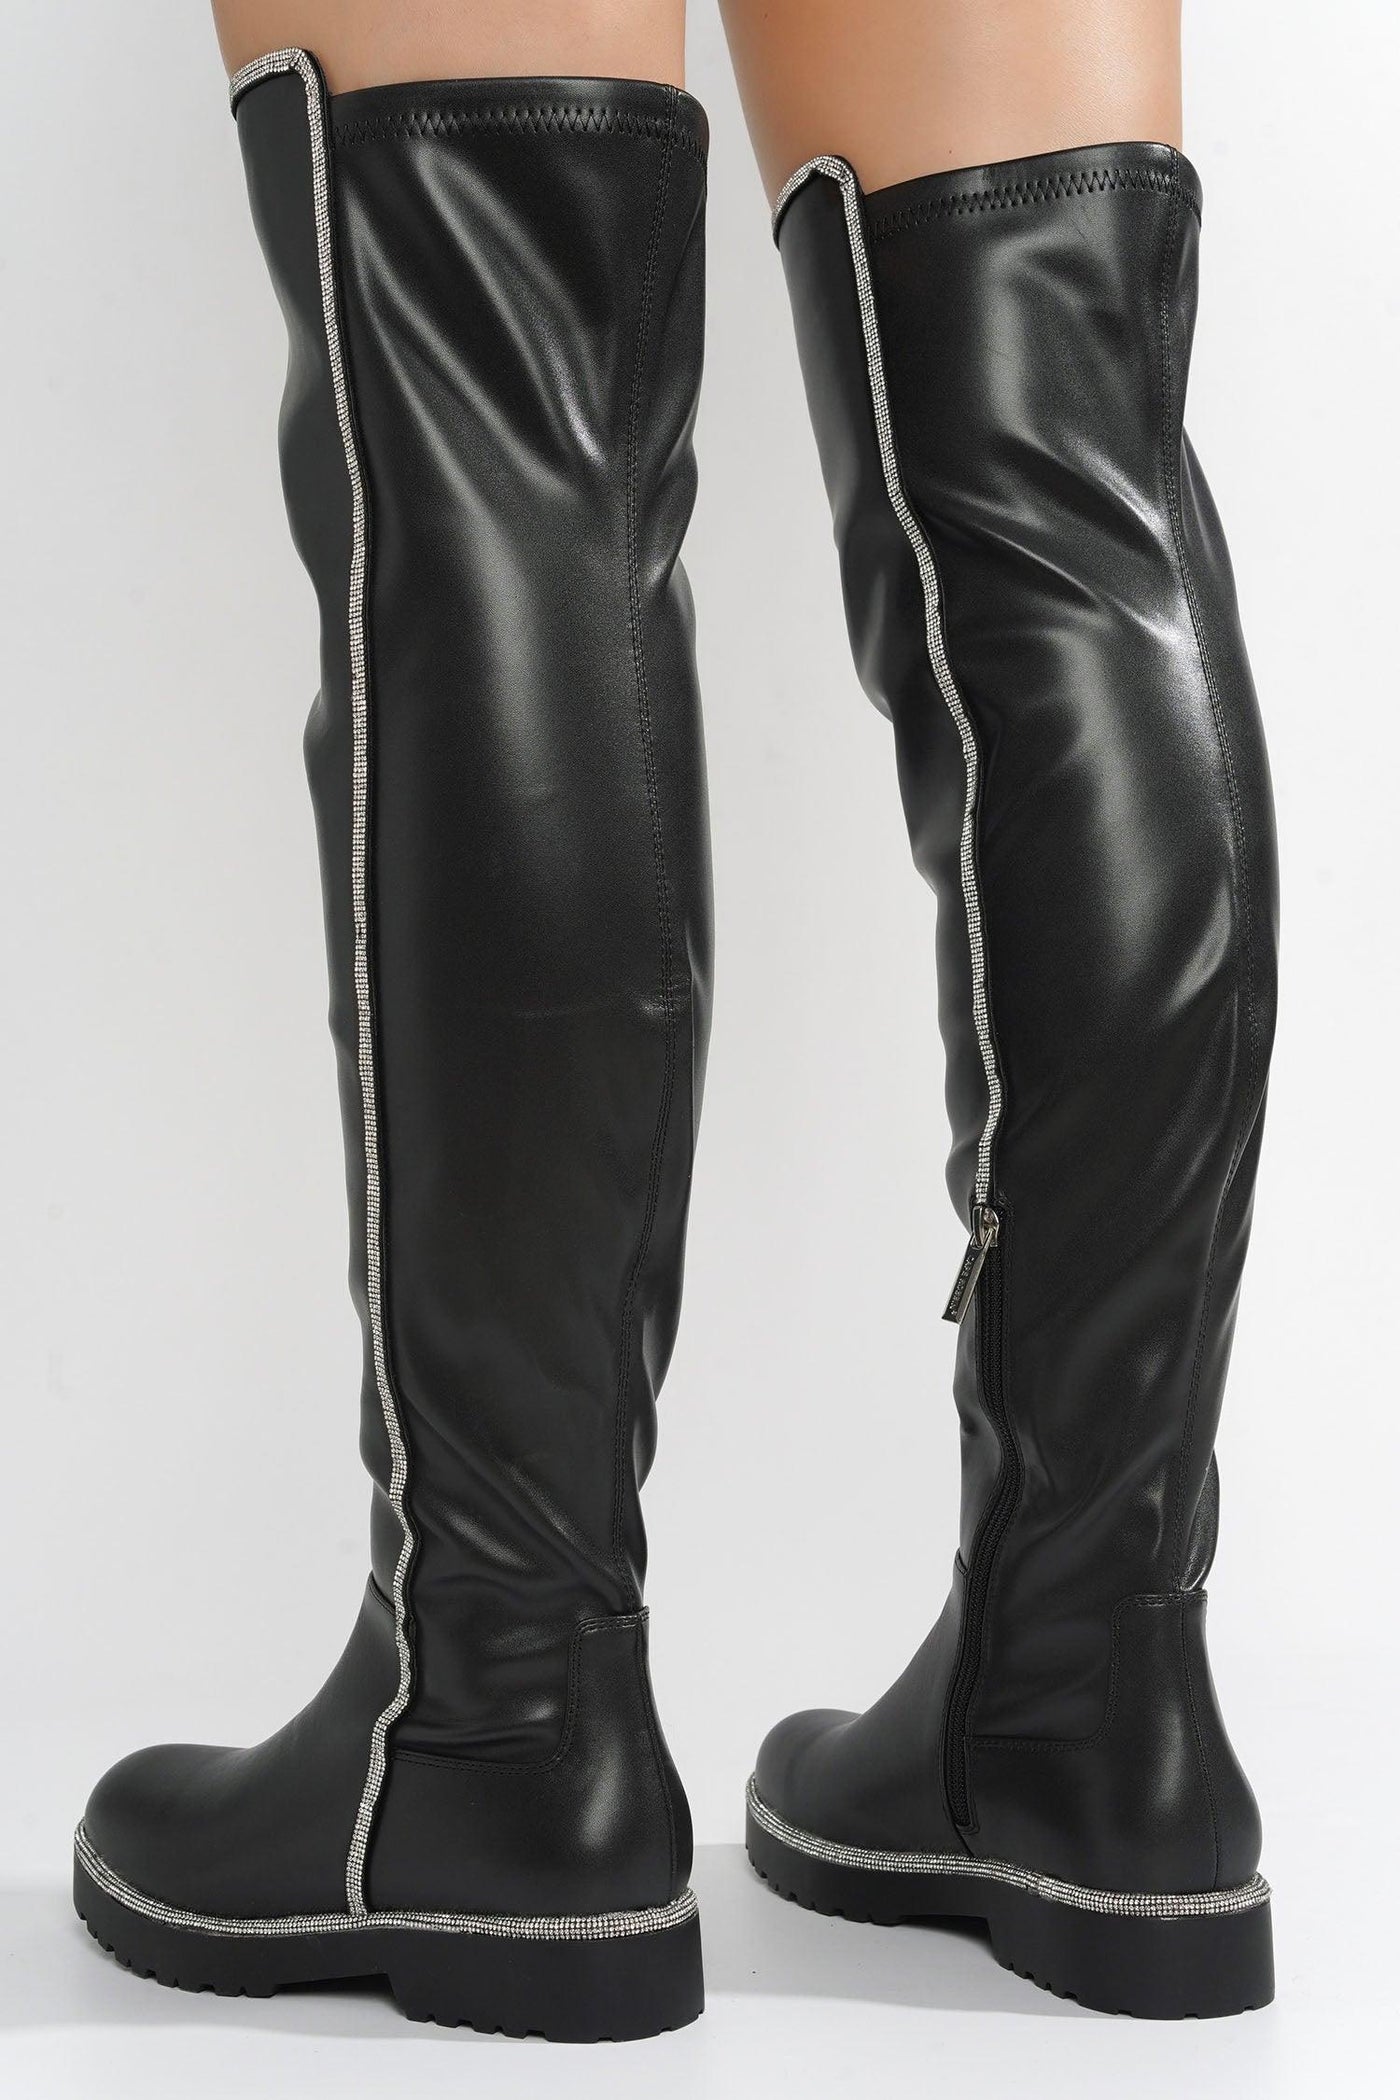 KURI - BLACK Thigh High Boots - AMIClubwear